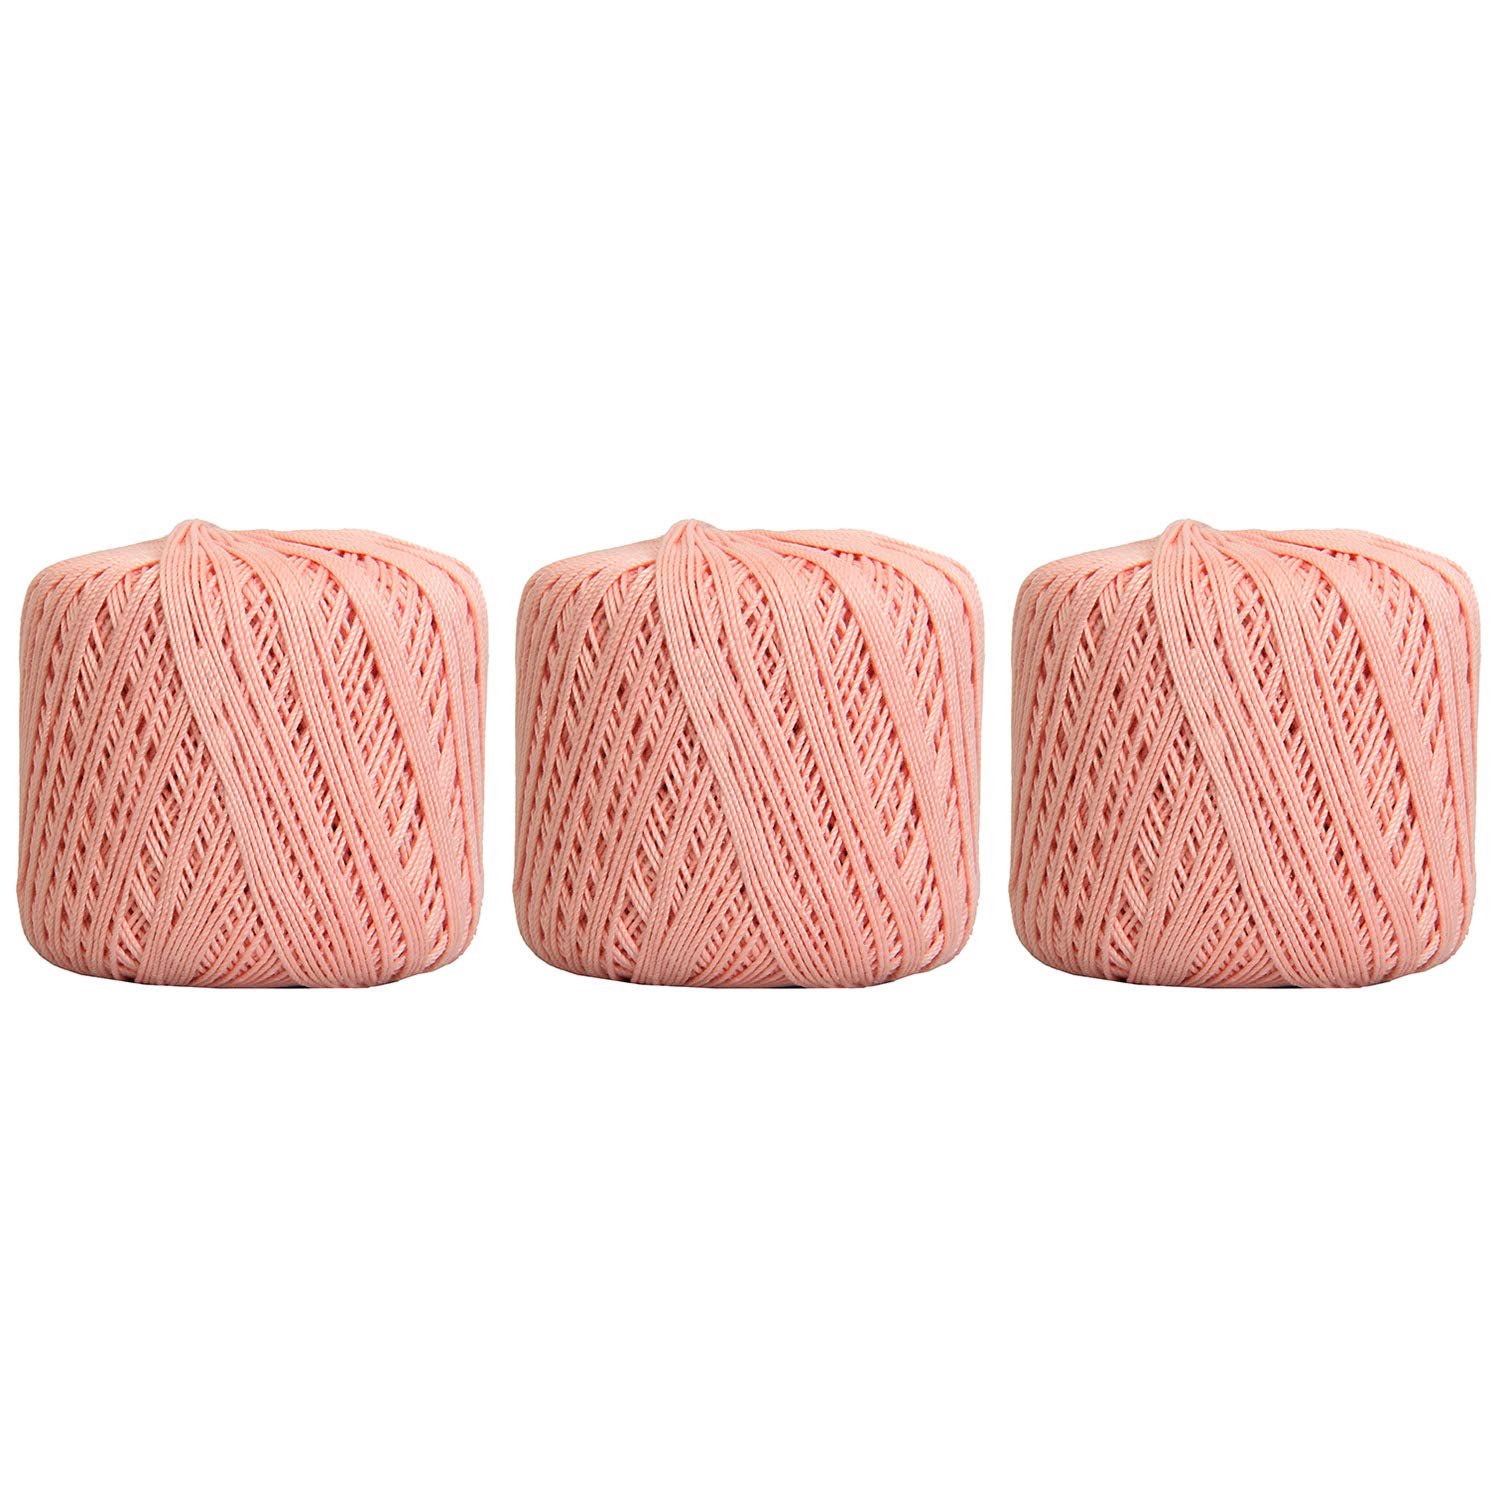 Threadart 3 Ball Pack Threadart 100 Pure Cotton Crochet Thread - Size 3 - Color 4 - Lt Pink - Size 10 And 3 - Singles And Bulk Packs Avail